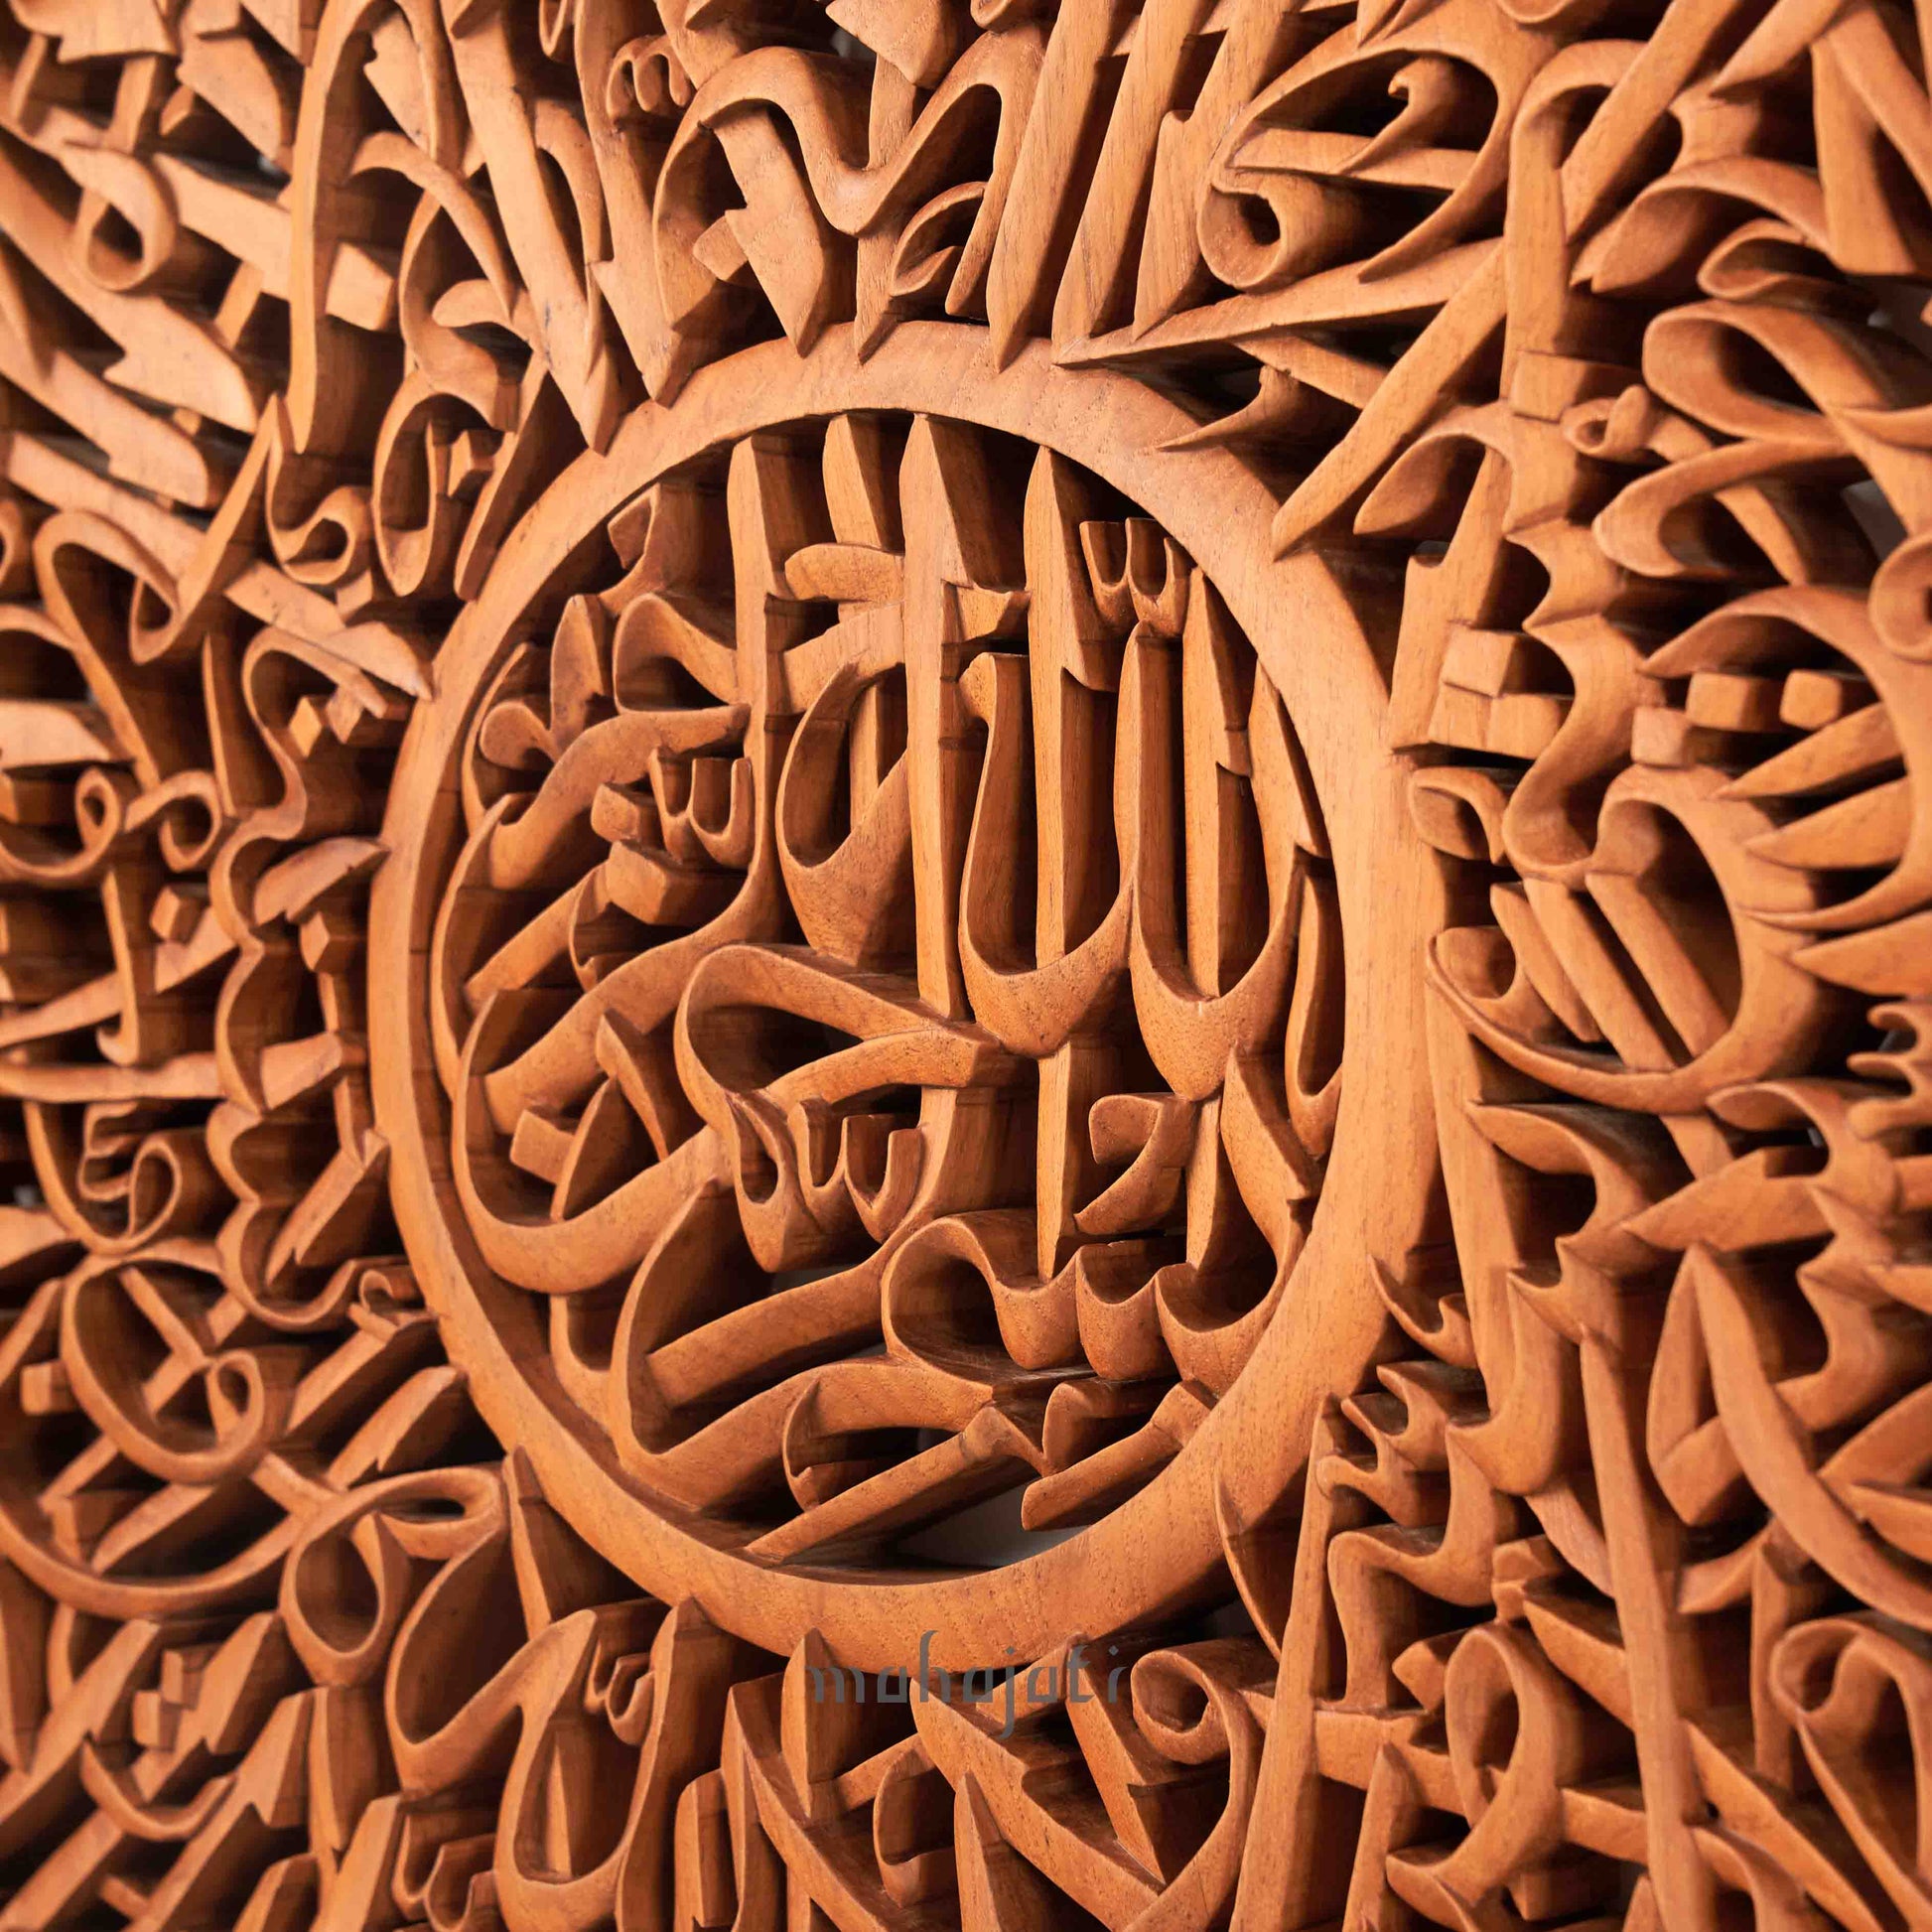 Ayatul Kursi / Bismillah Wall Art, Home Decor, and Gift by Mahajati